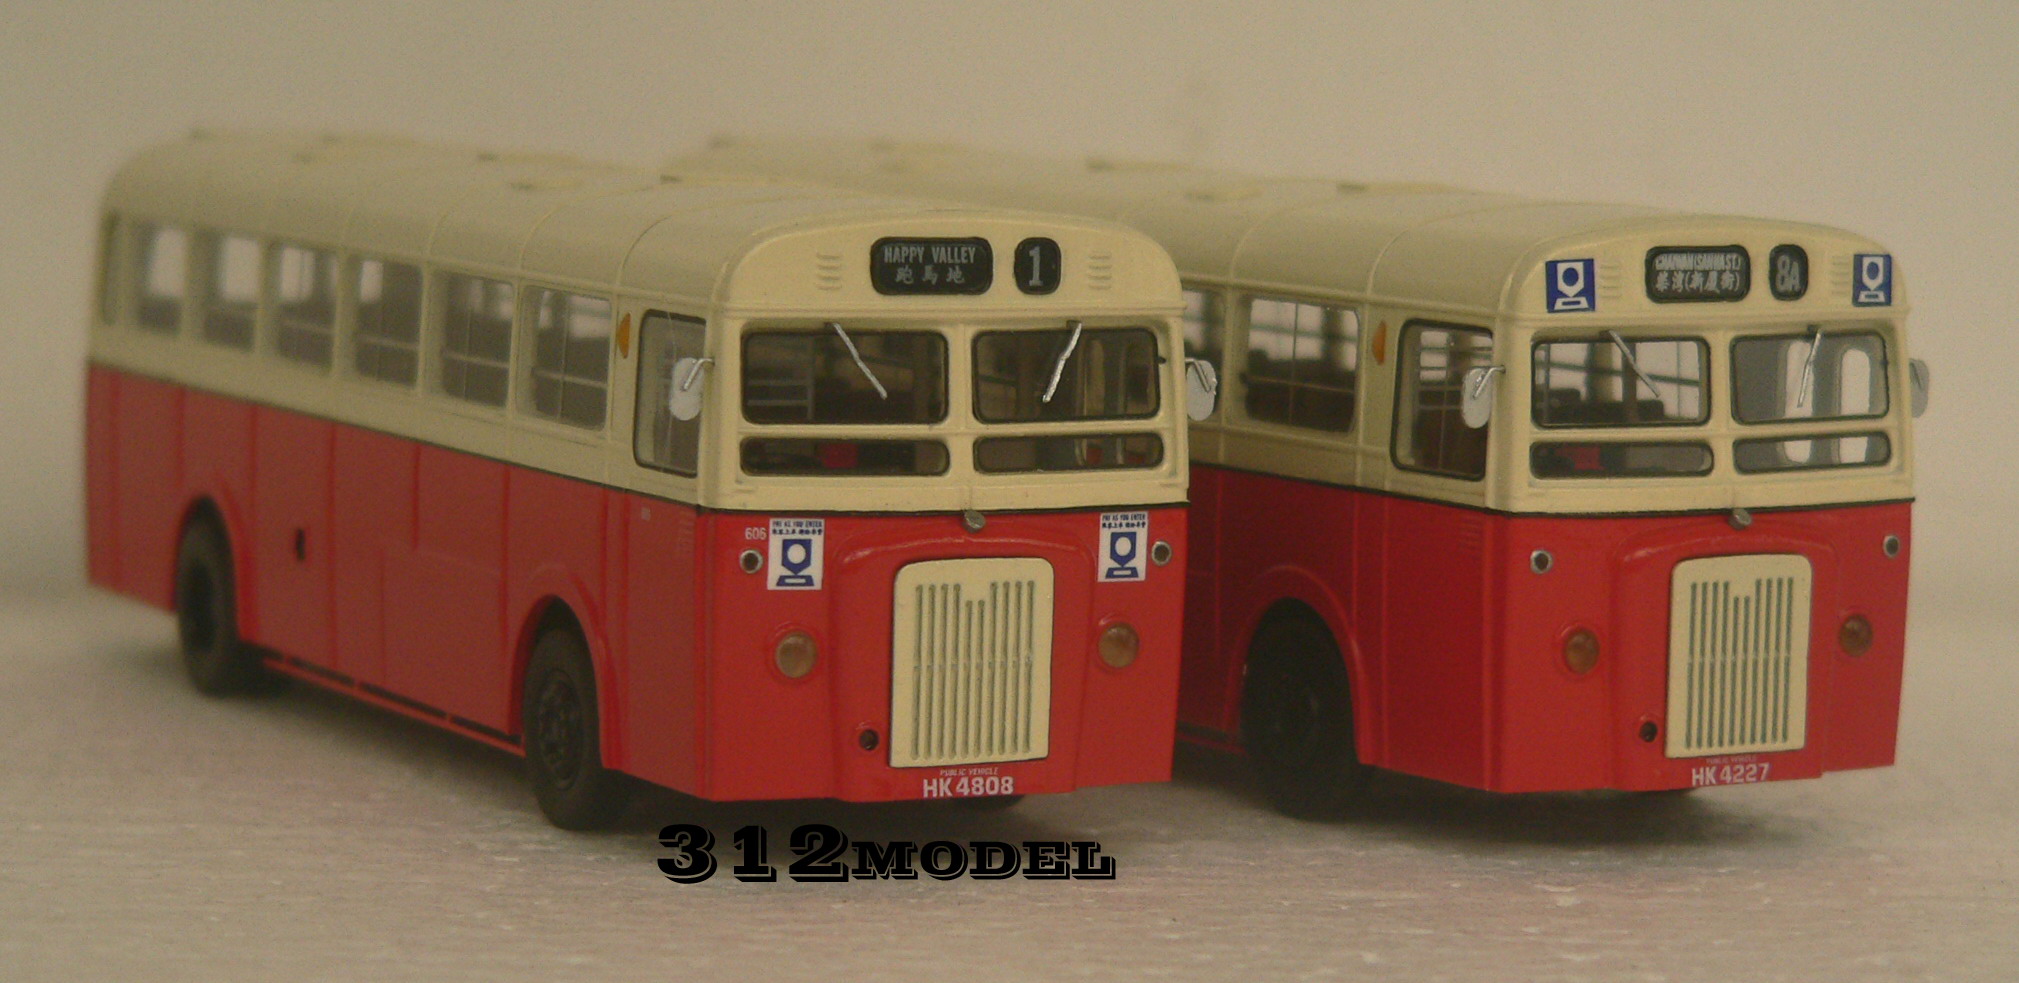 Guy Arab UF bus model-0424.jpg